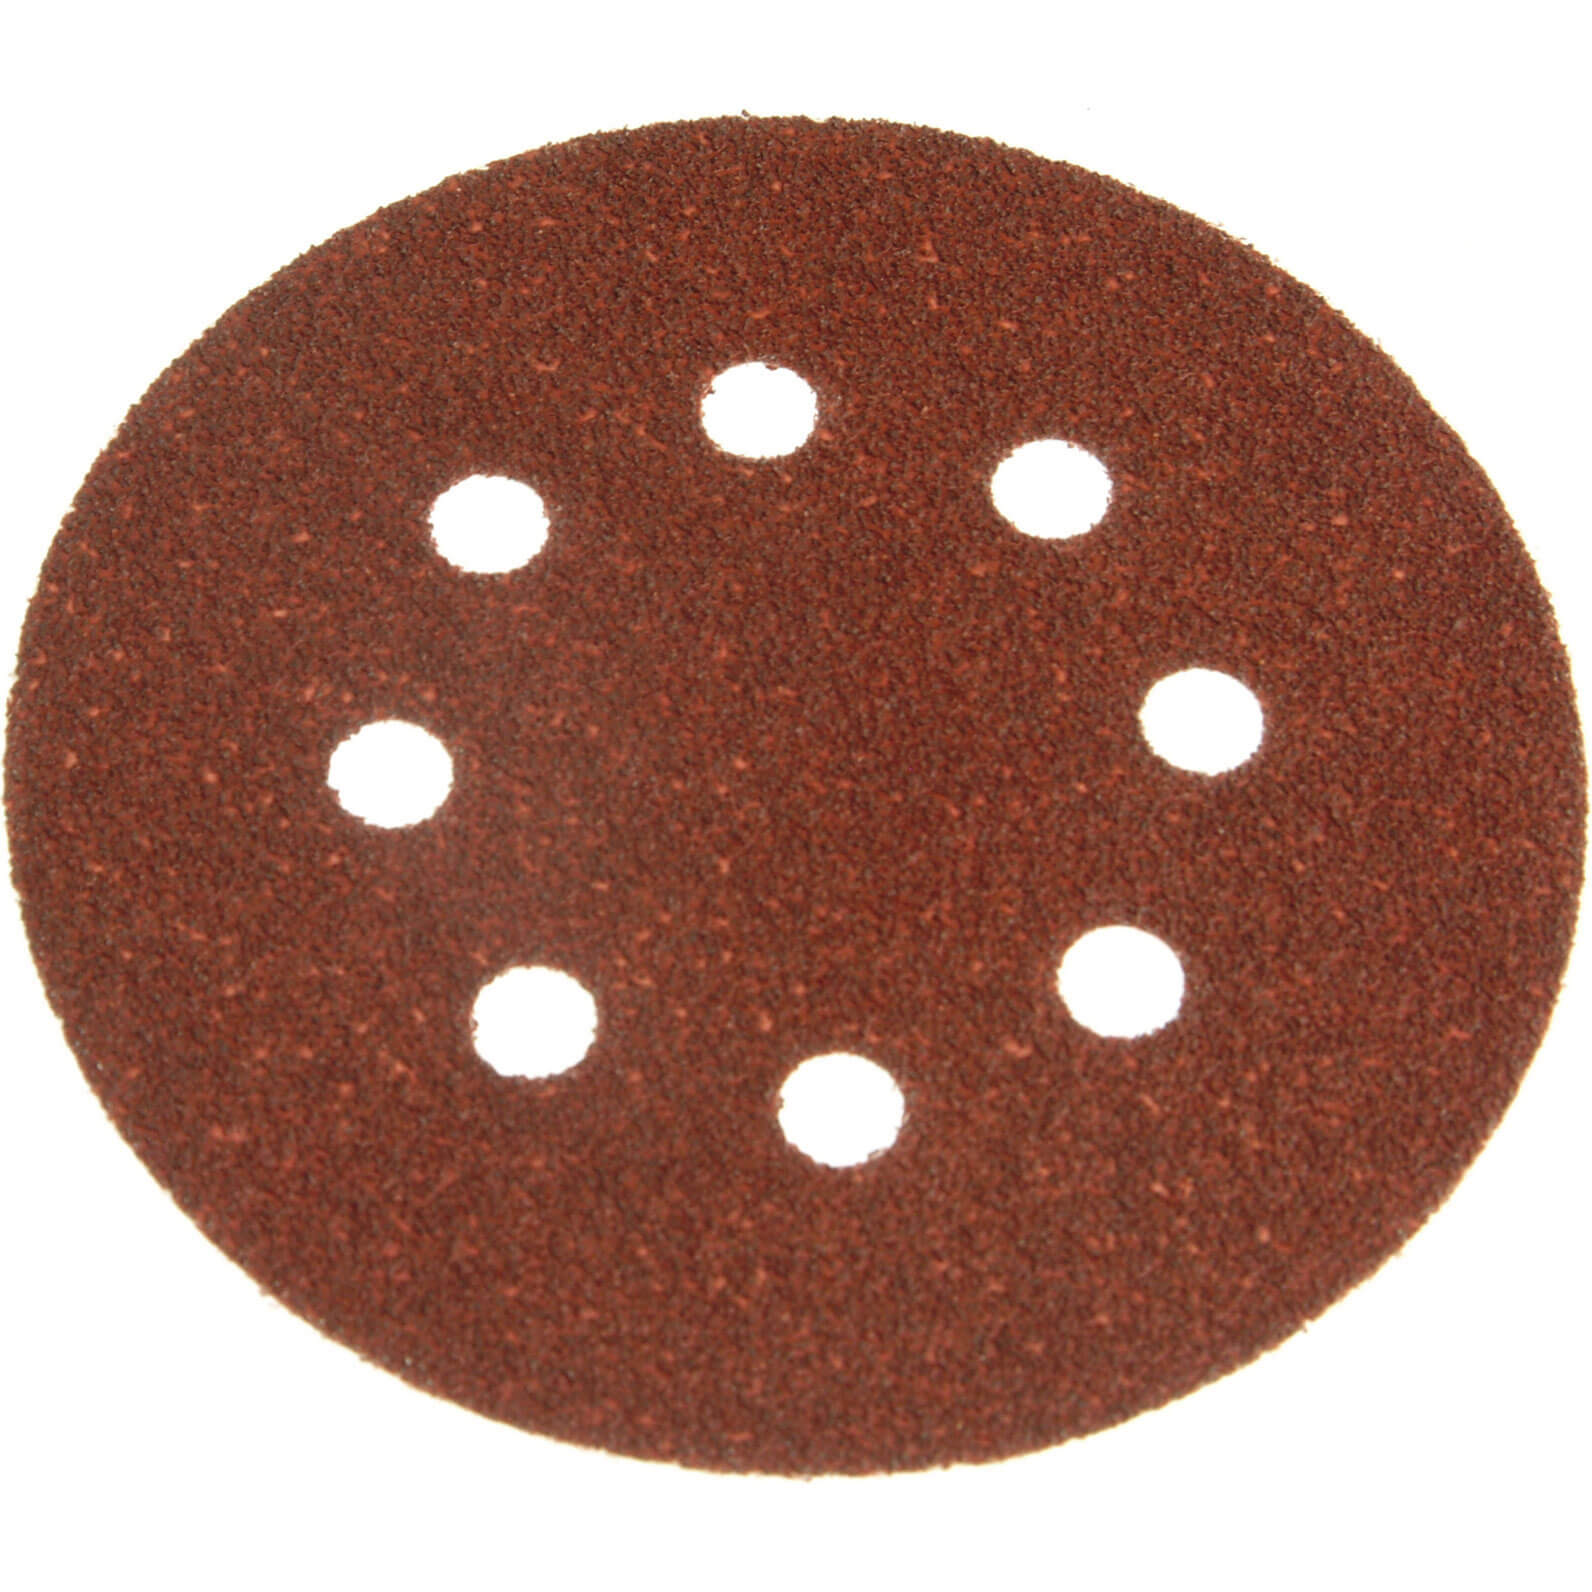 Black & Decker X32177 Perf Sand Discs (5) Ex Cse 125mm